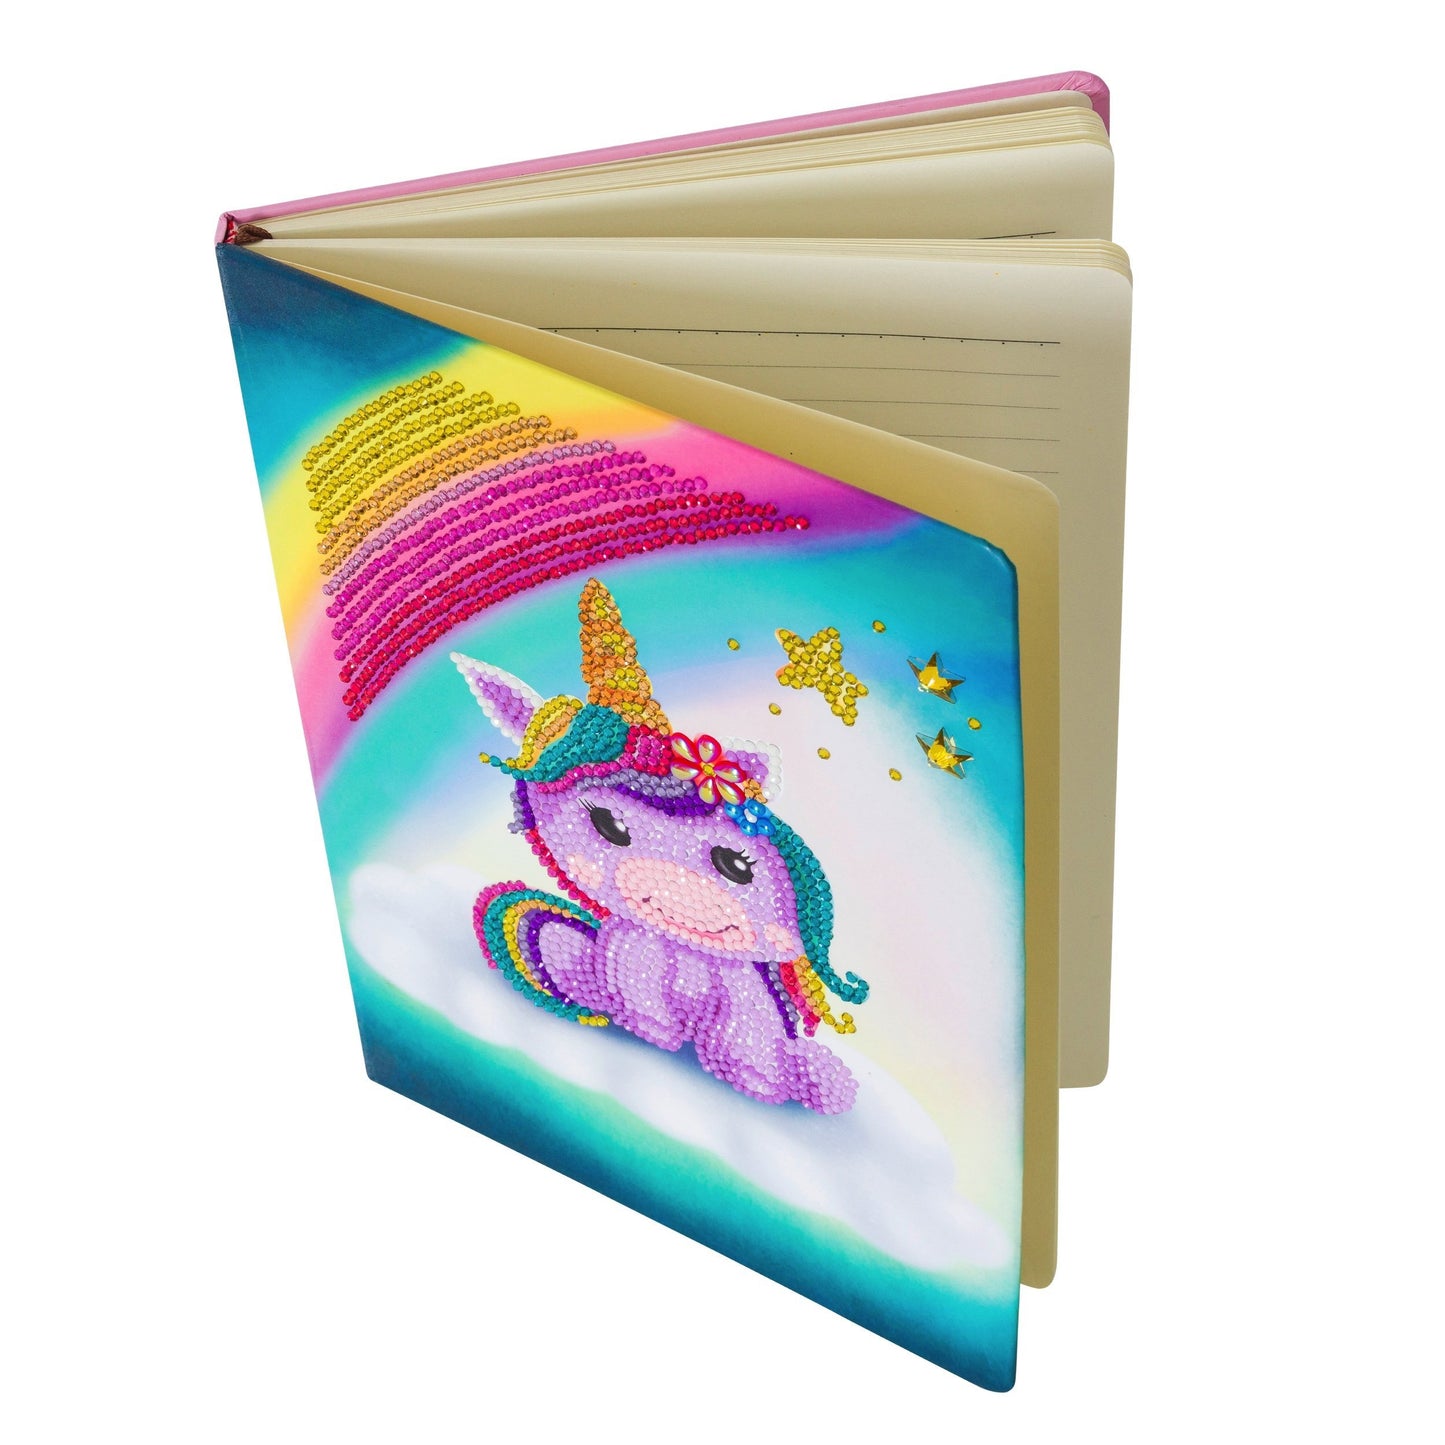 CANJ-3 "Unicorn Smile" Crystal Art Notebook Kit, 26 x 18cm